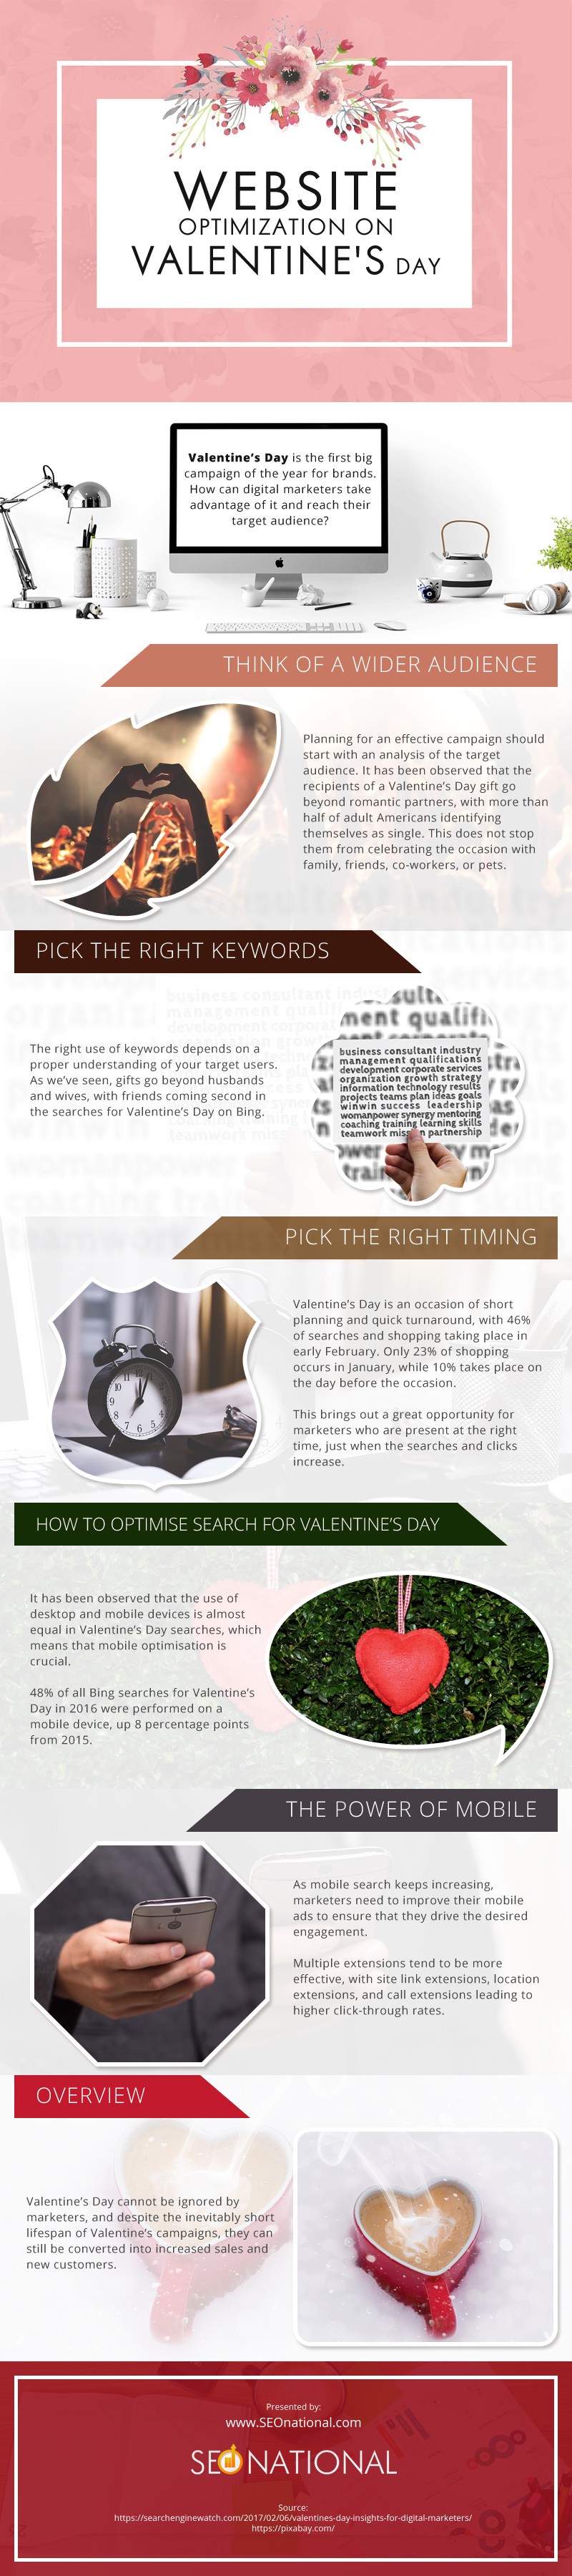 Website Optimization on Valentine’s Day [infographic]